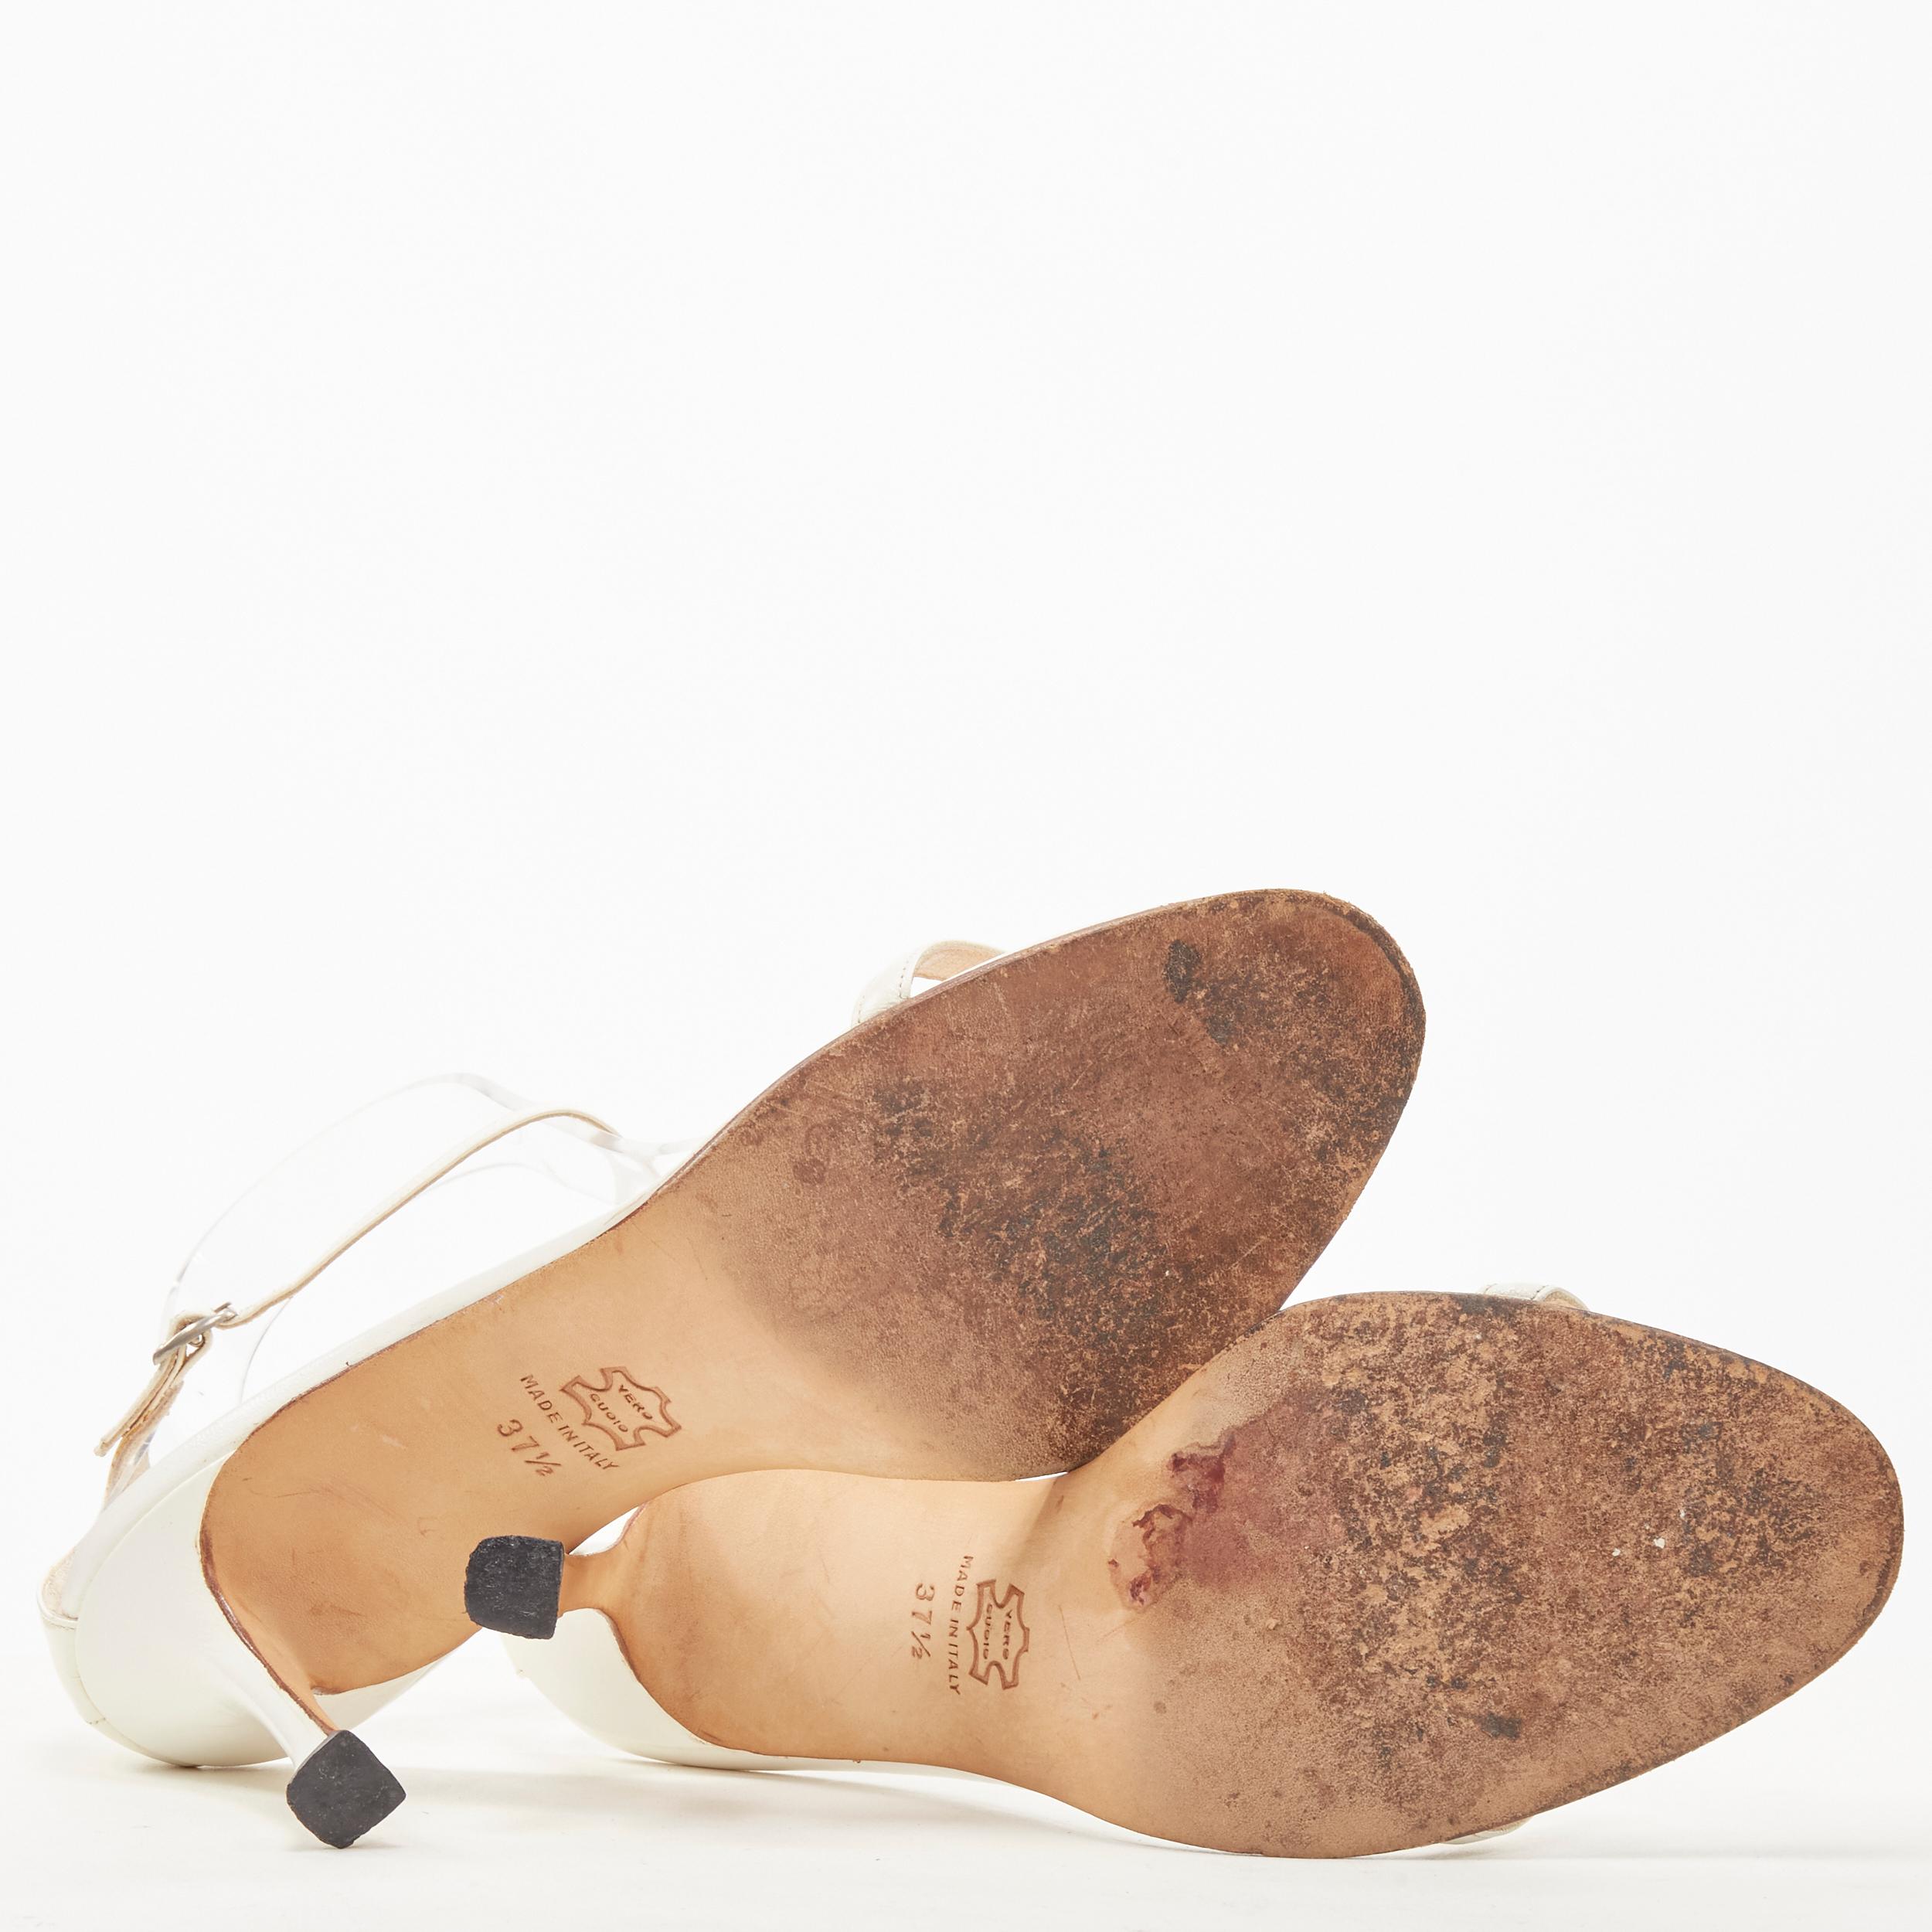 White MANOLO BLAHNIK white leather minimalist strappy high heel sandals EU37.5